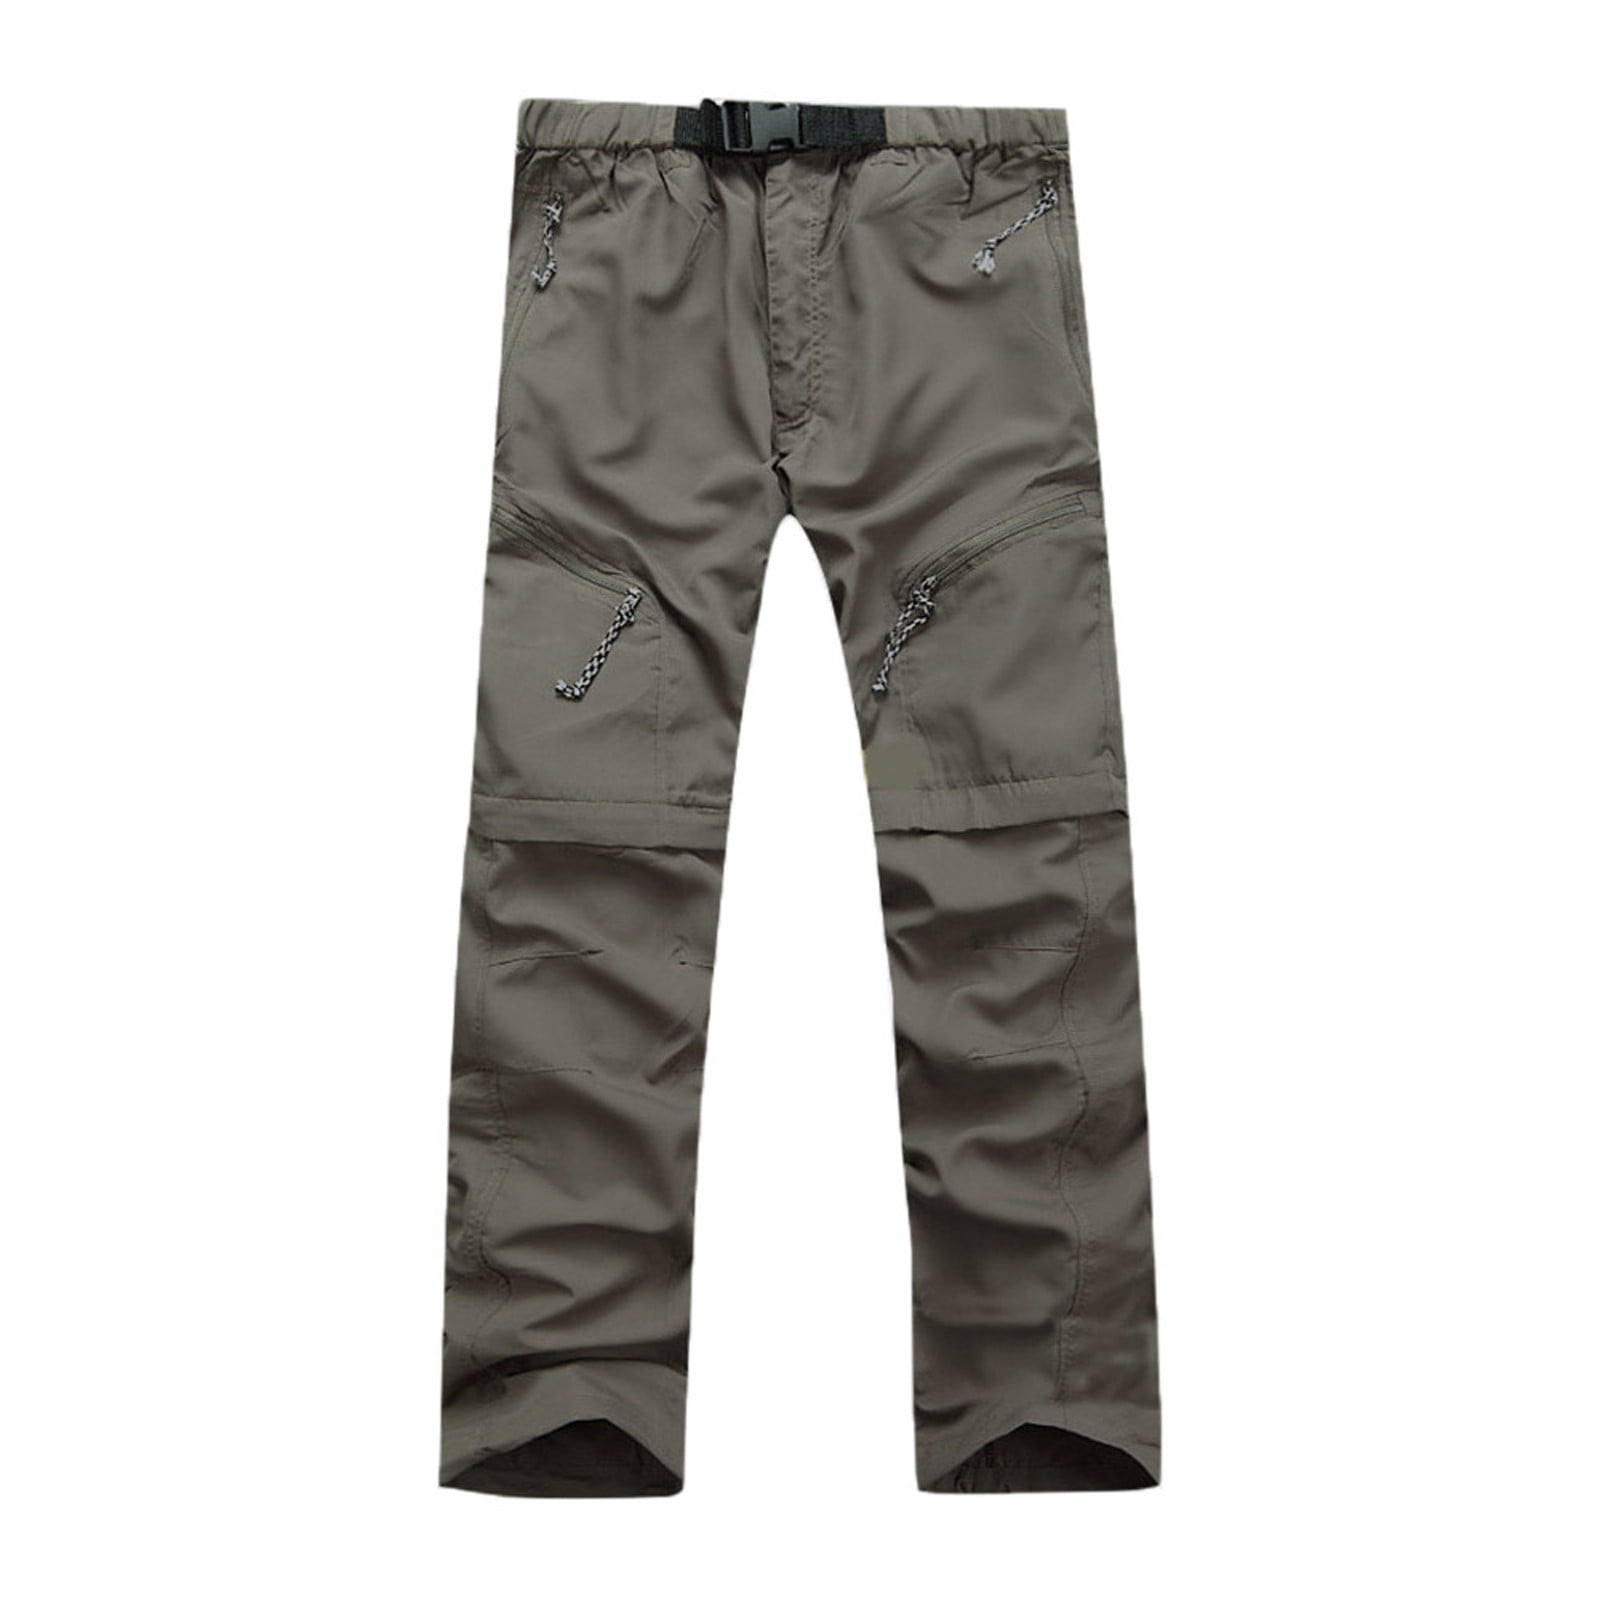 VBXOAE Outdoor Quick Dry Convertible Pants Lightweight Hiking Fishing ...